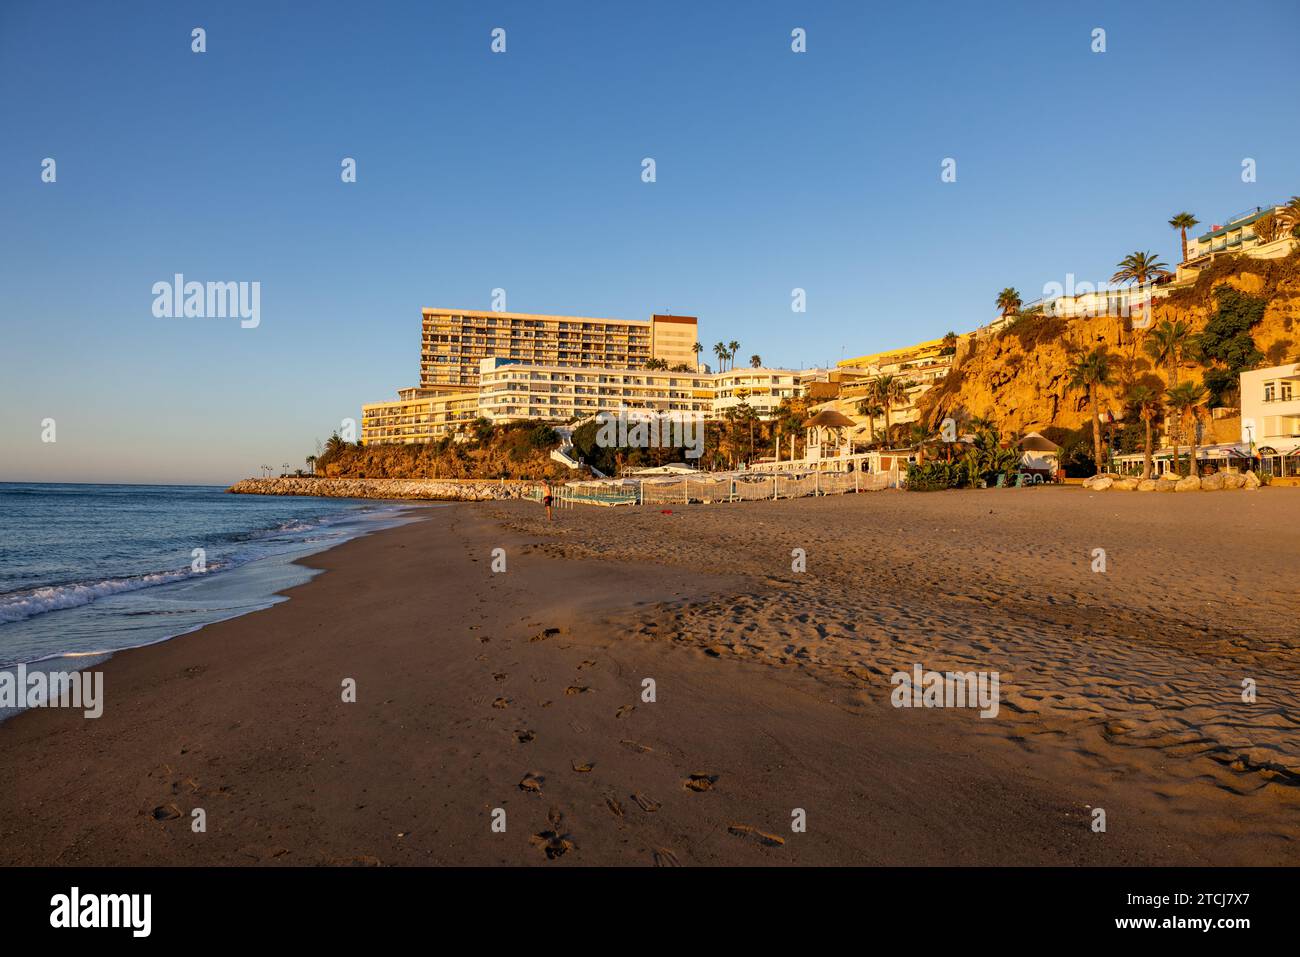 View of Bajondillo Beach and hotels in Torremolinos at sunrise. Costa del Sol, Spain. Stock Photo